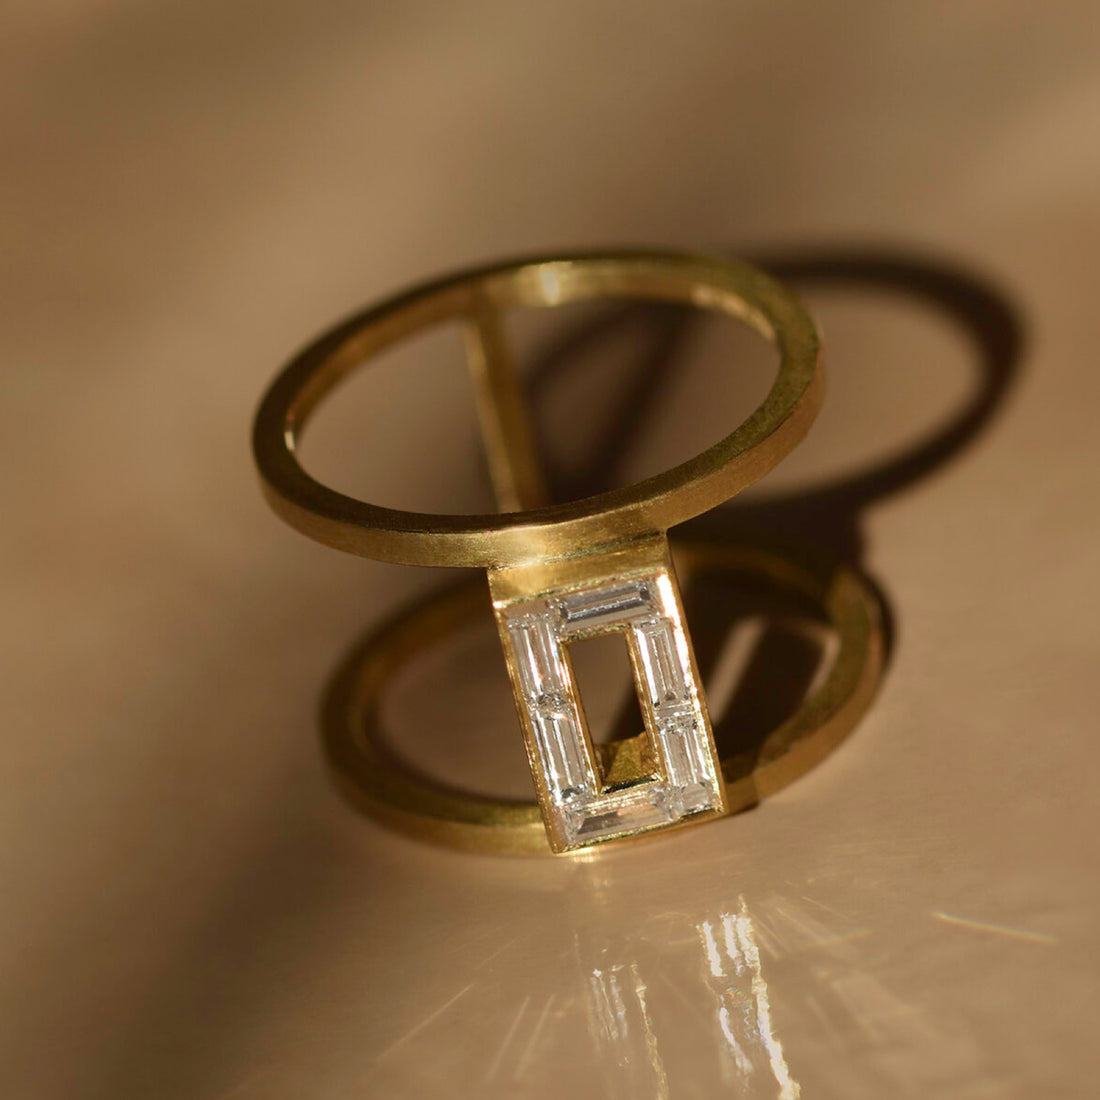  Formation Baguette Diamond Ring by Shivani Chorwadia | The Cut London